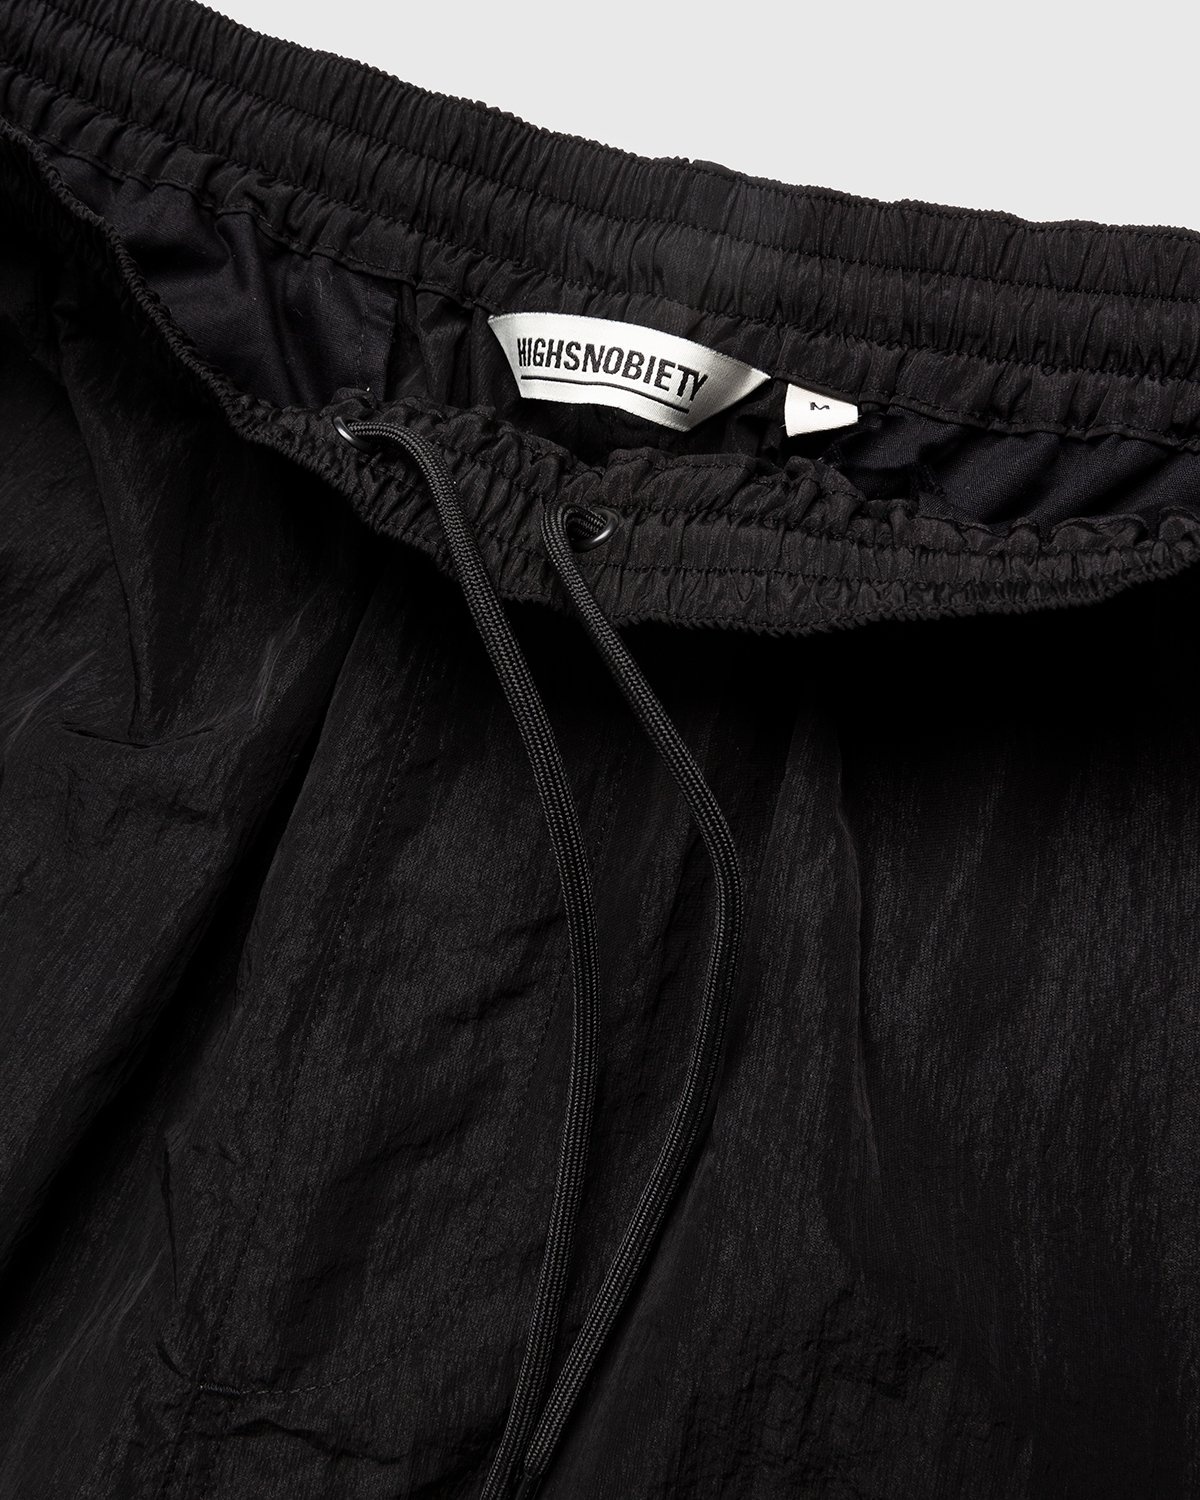 Highsnobiety – Crepe Nylon Elastic Pants Black - Pants - Black - Image 5